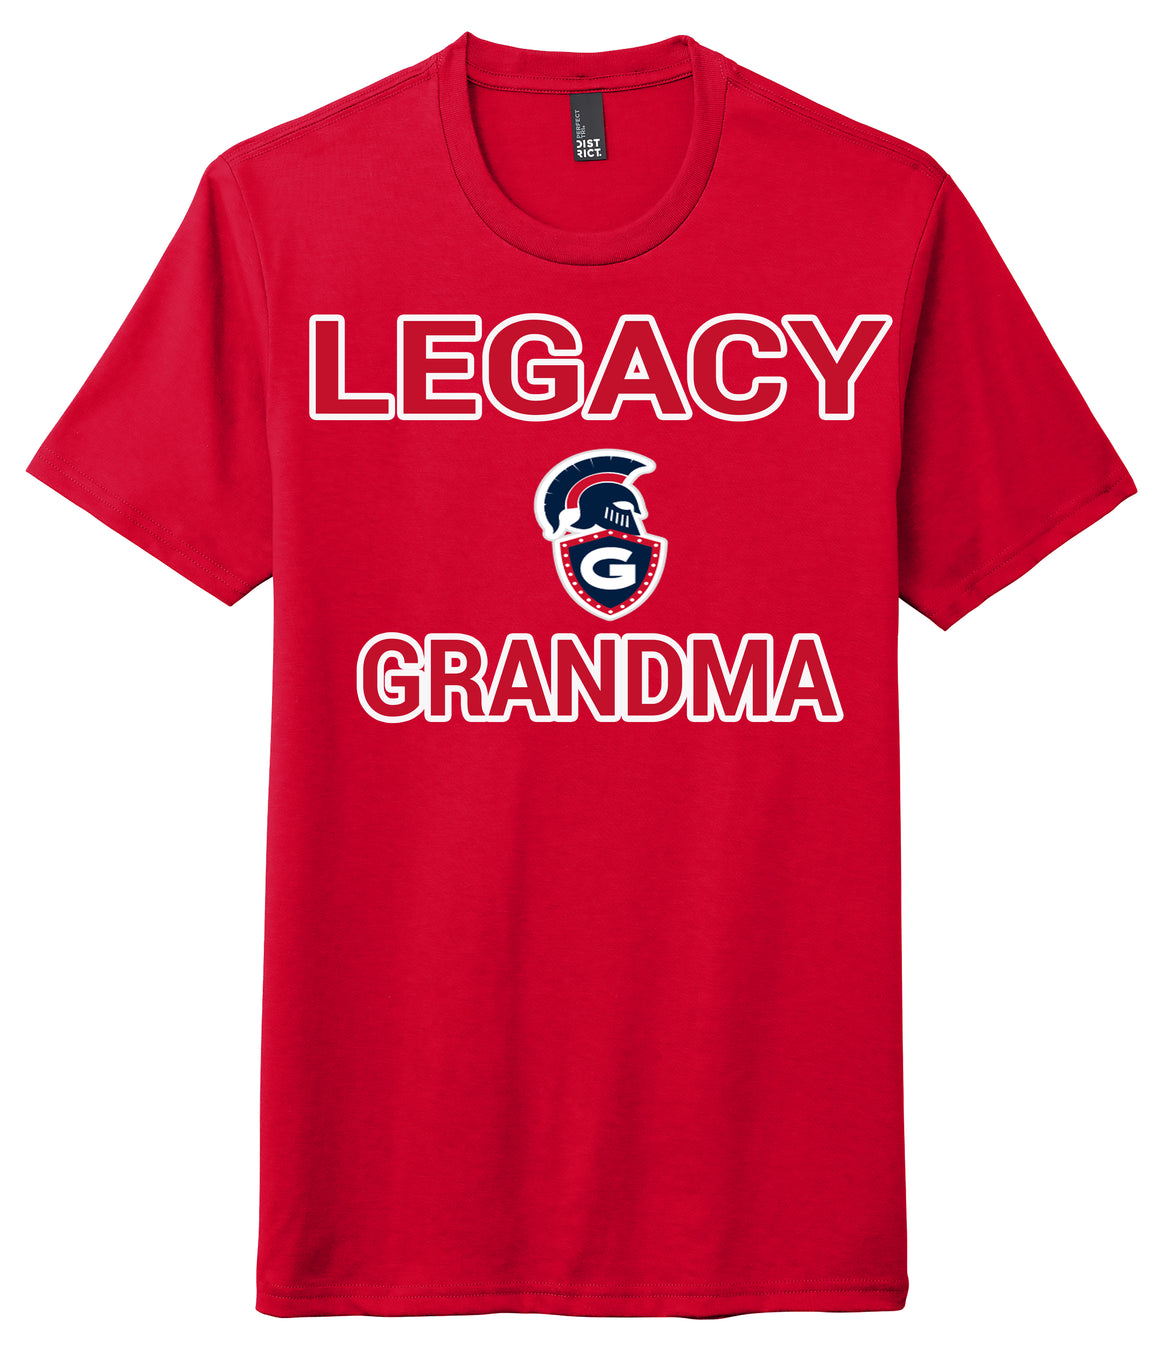 Legacy Traditional School Glendale - Grandma Shirt